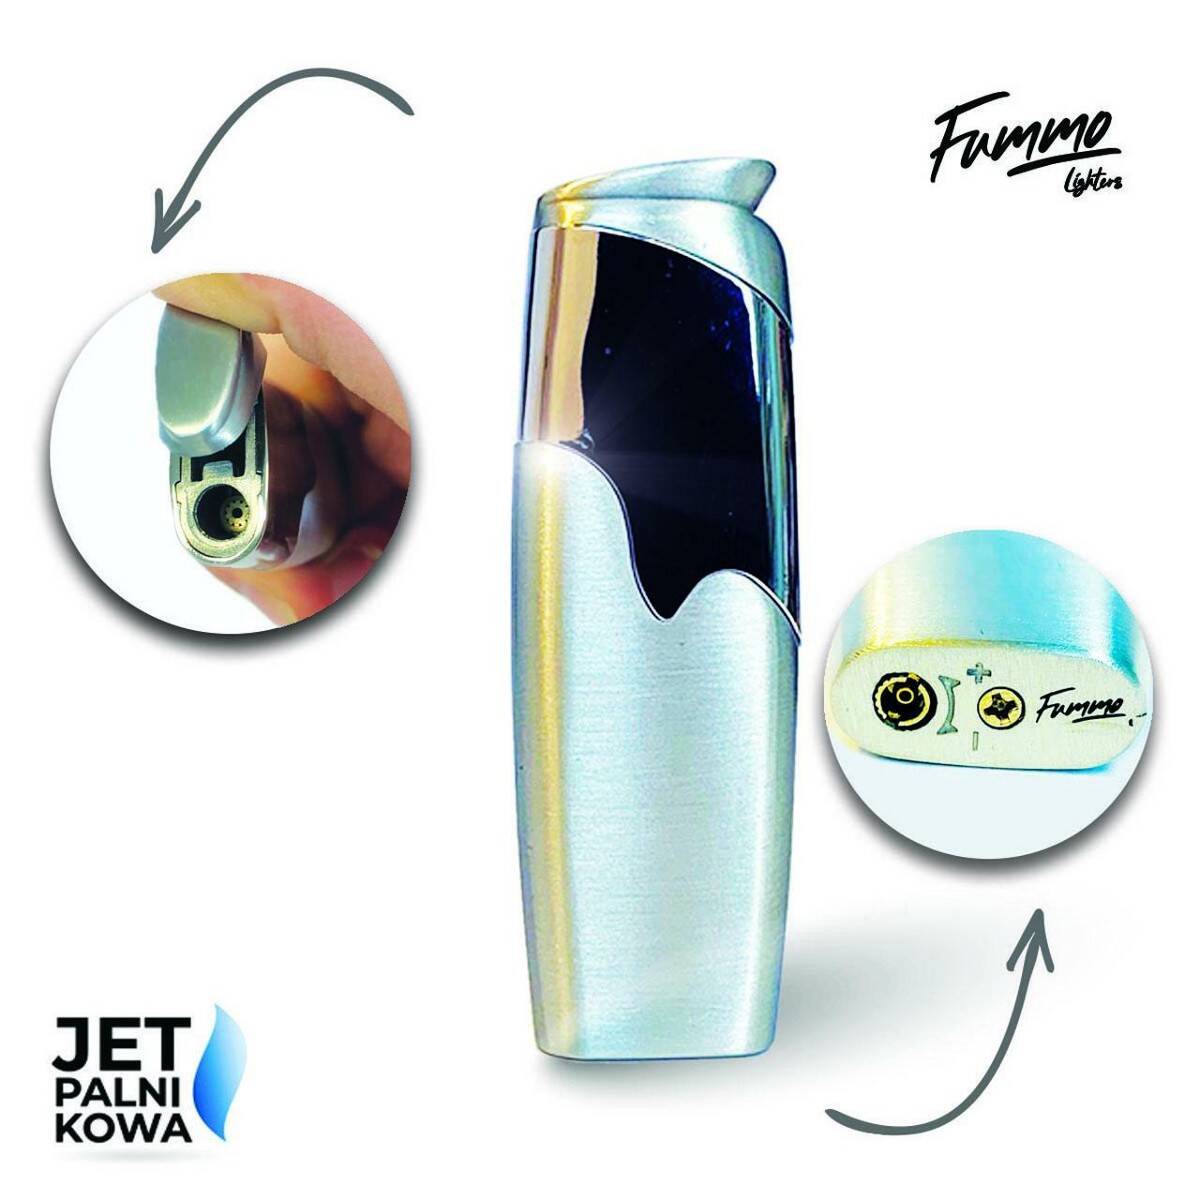 Lighter - Fummo Eden (Jet/Silver)